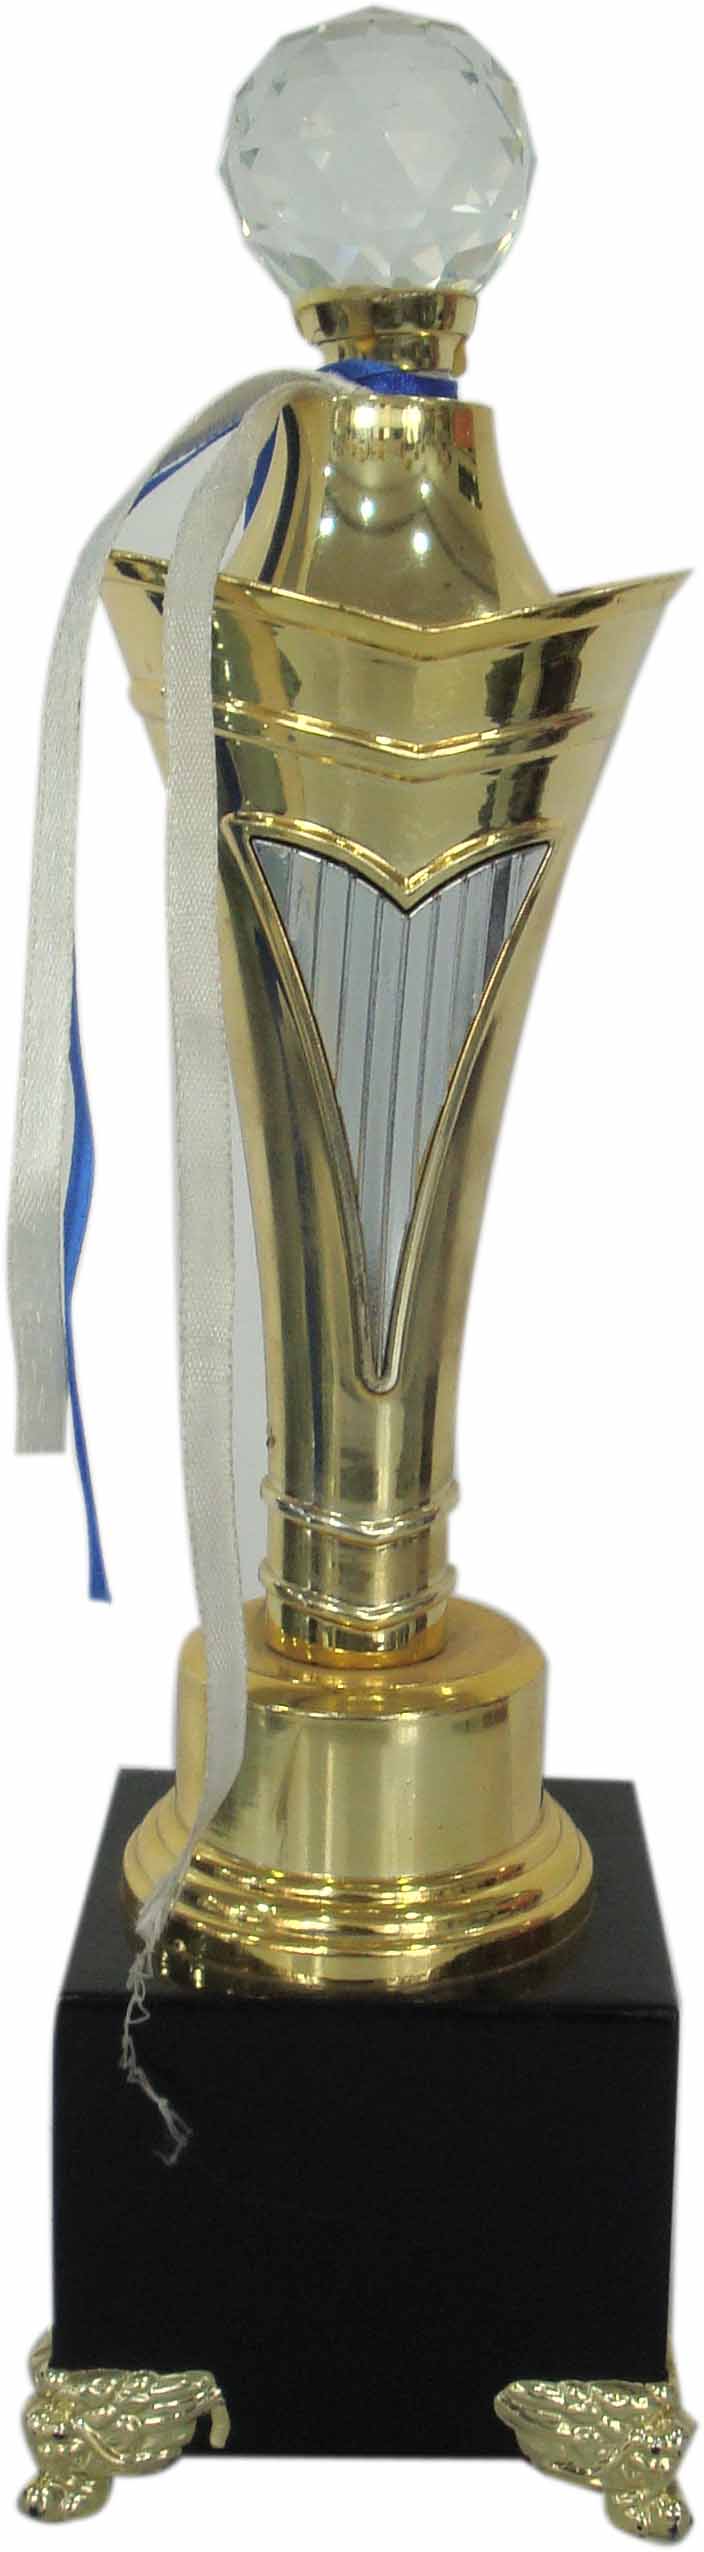 ABS MM 28   | Prize Land | ABS trophy manufacturer in Chandigarh - GLK2368